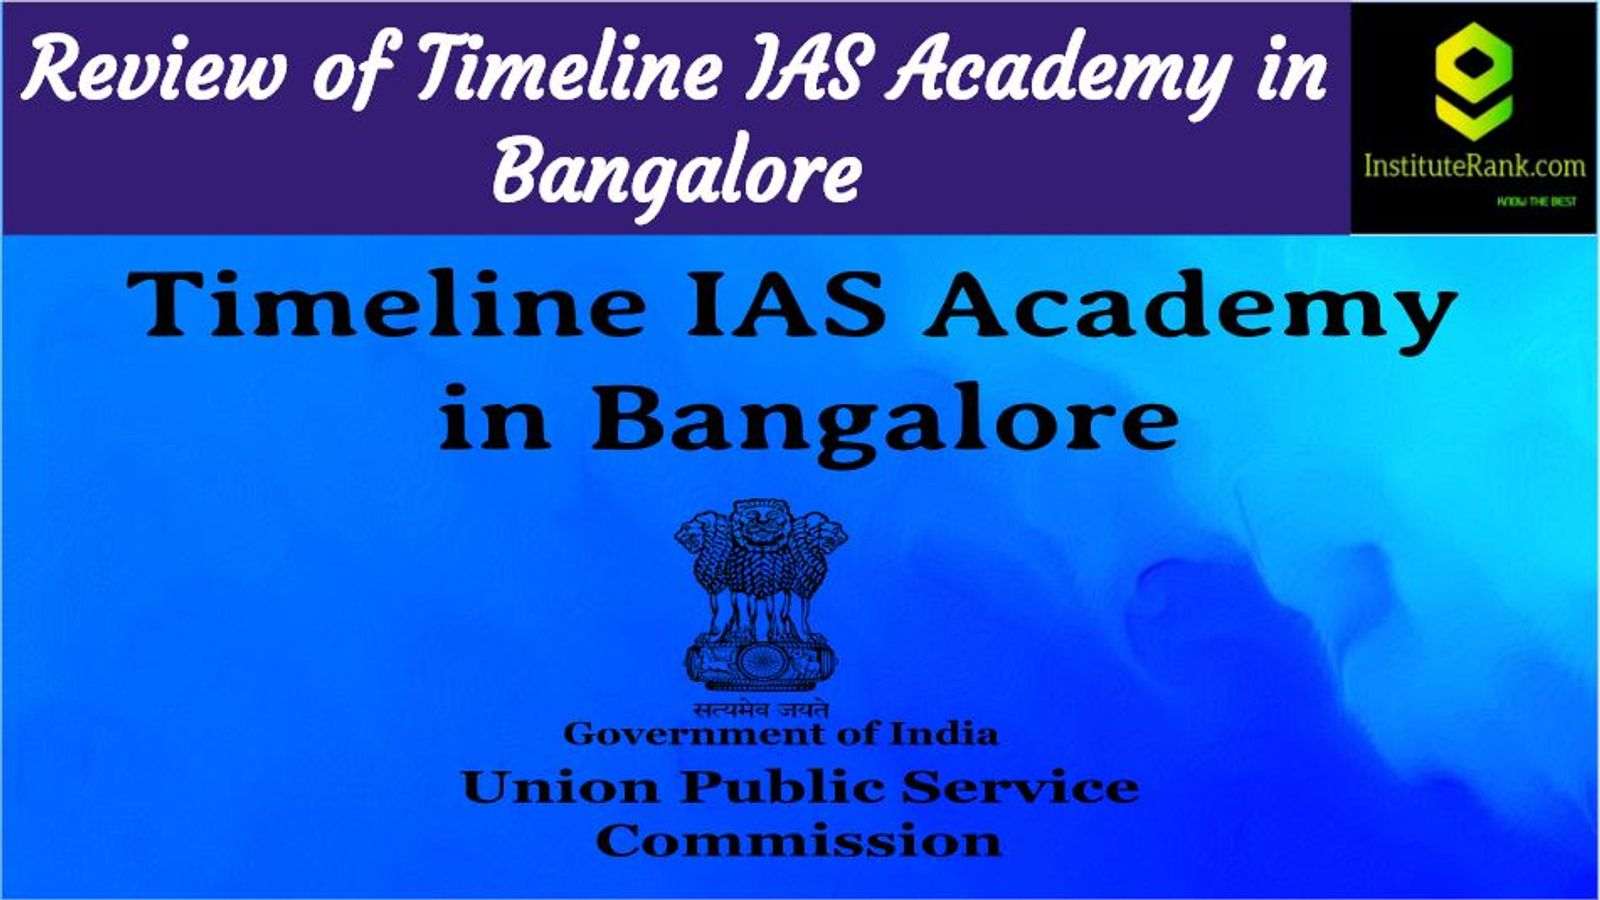 Timeline IAS Academy Bangalore Review